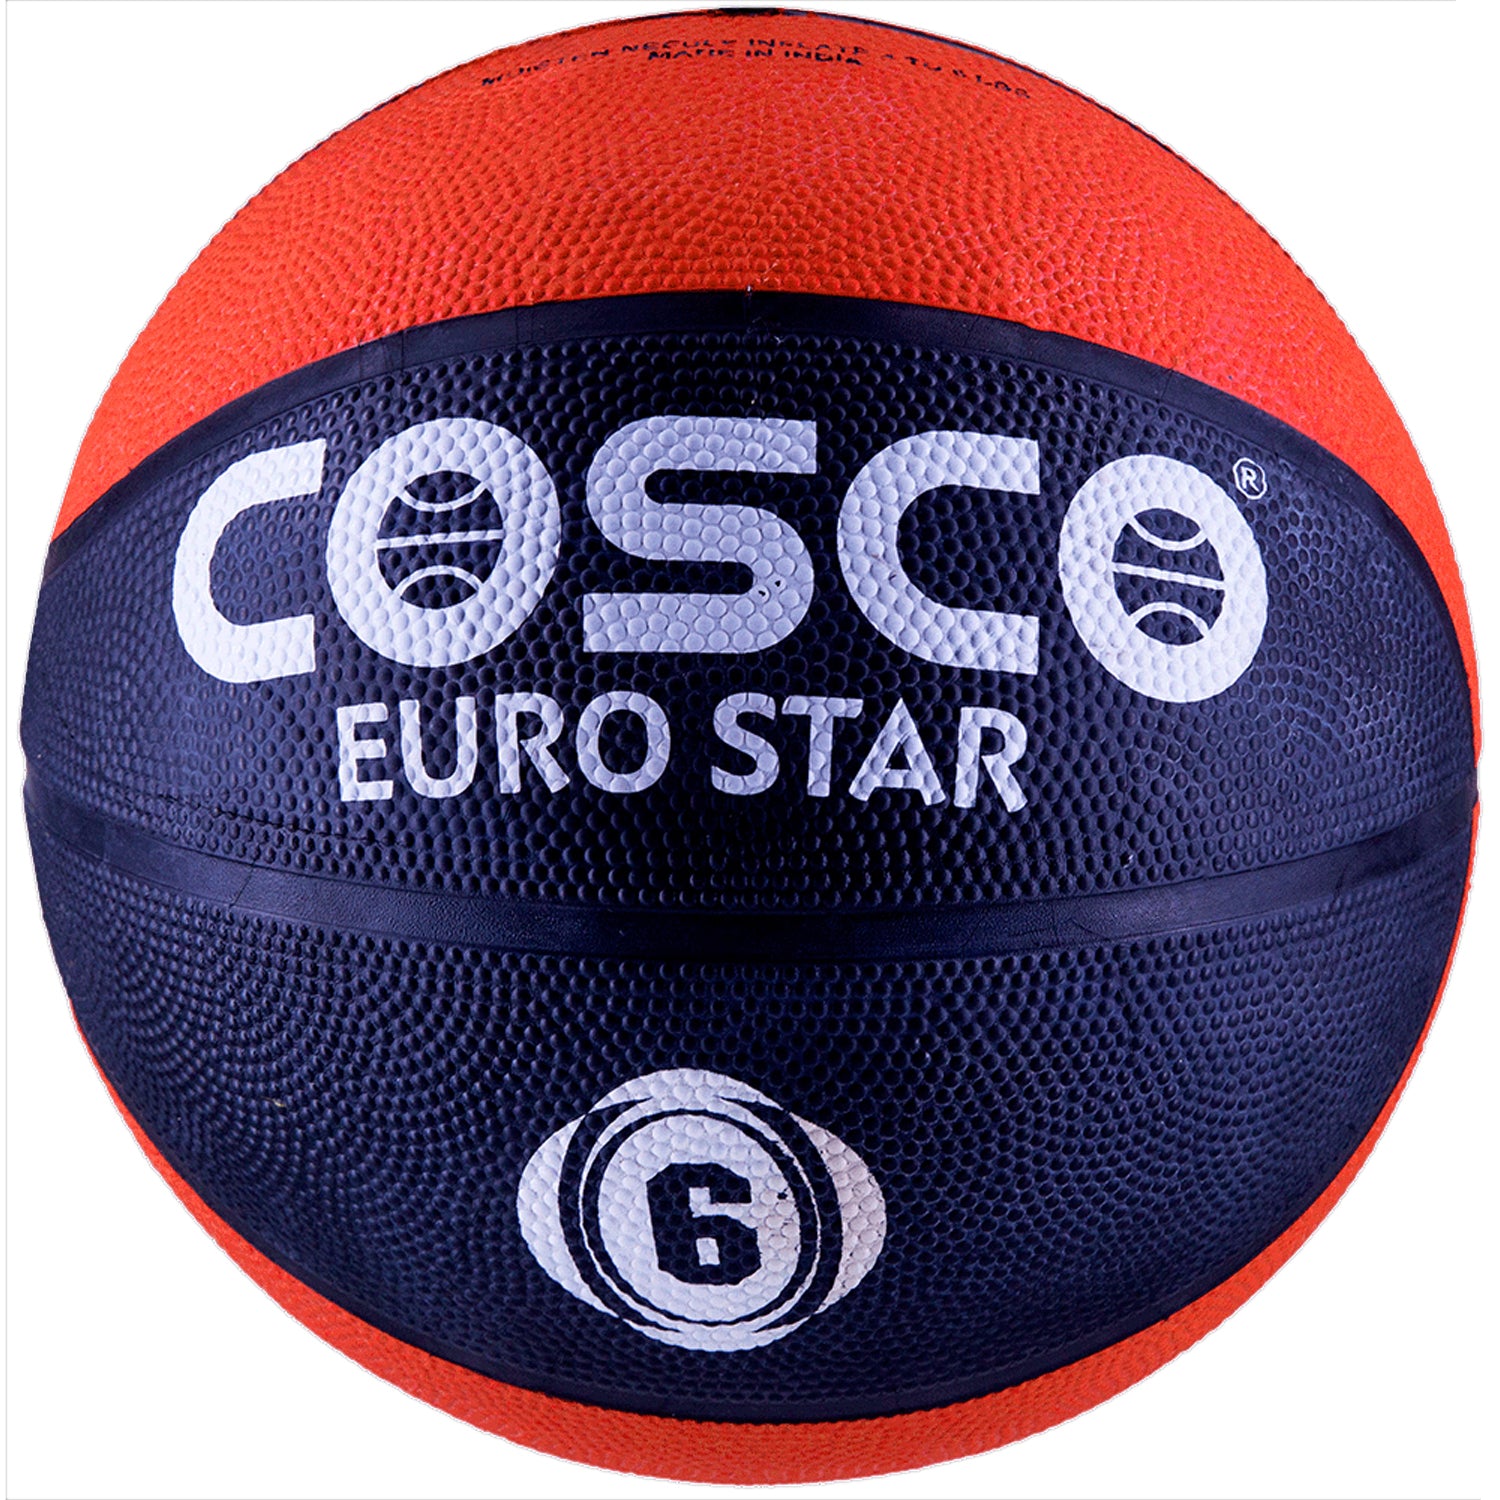 Cosco Euro Star Basketball, Black/Brown (Size 6) - Best Price online Prokicksports.com